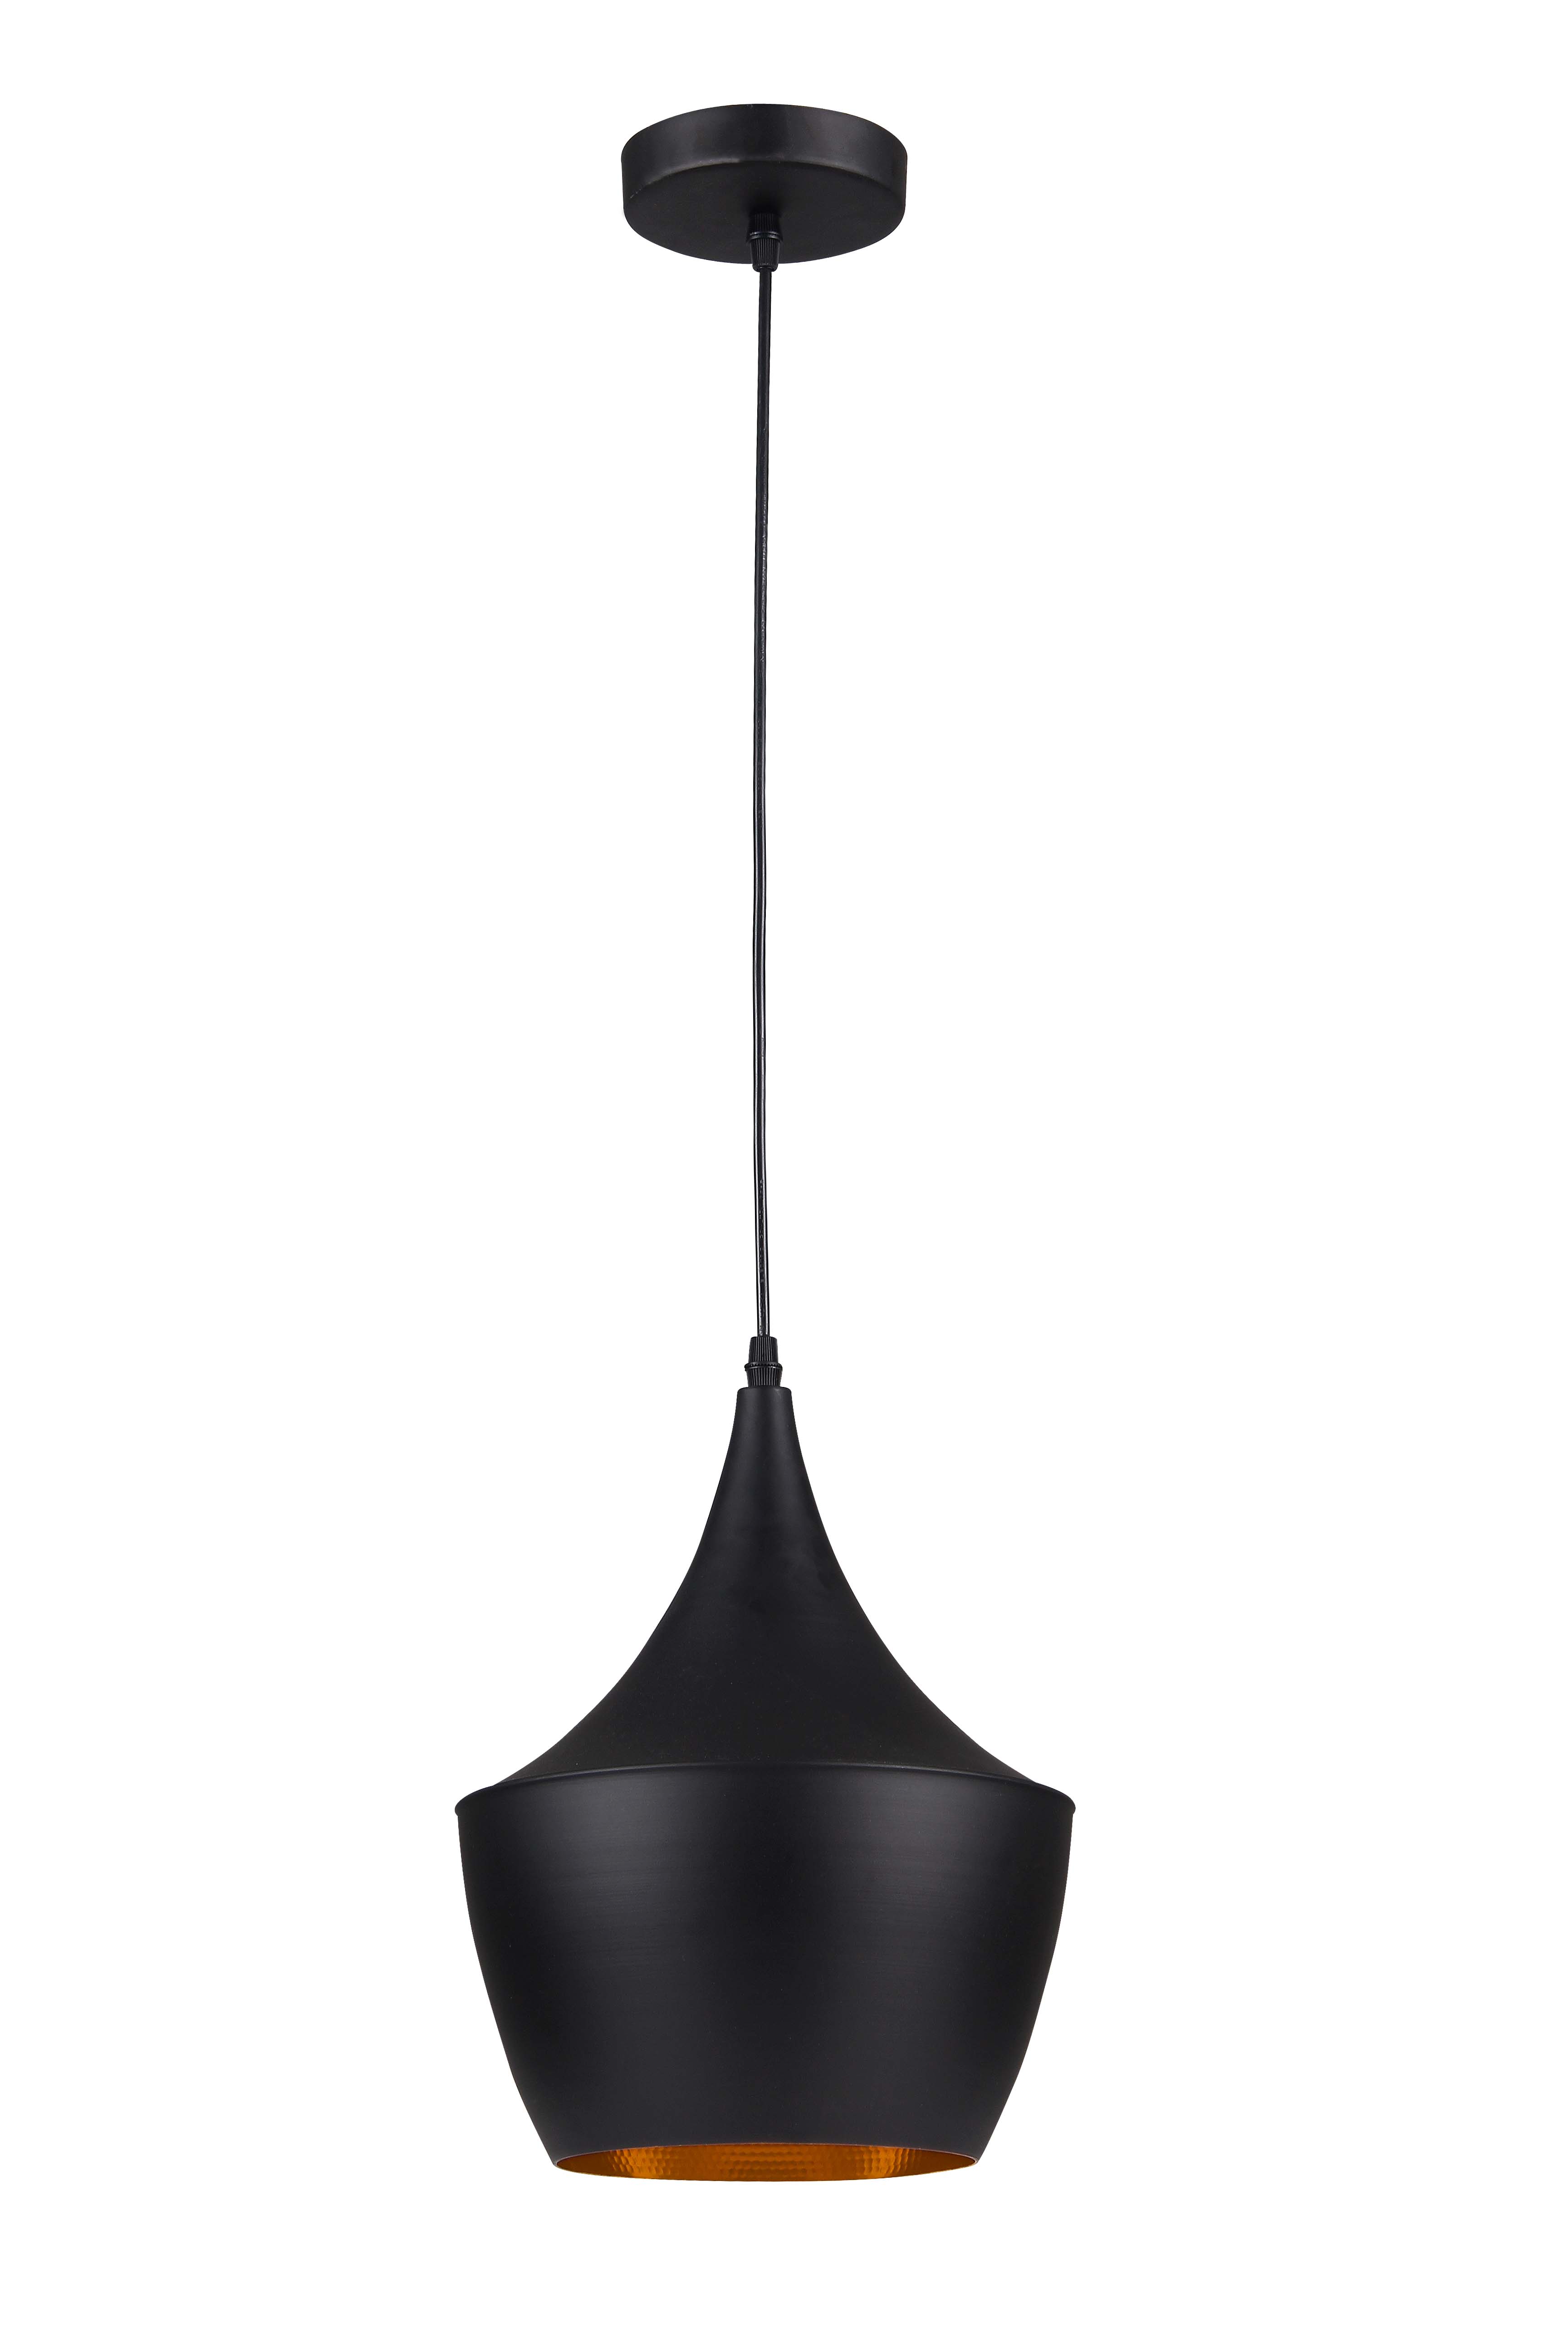 P1096BK E27 pendant light Retro Aluminum design Black Modern hanging lamp